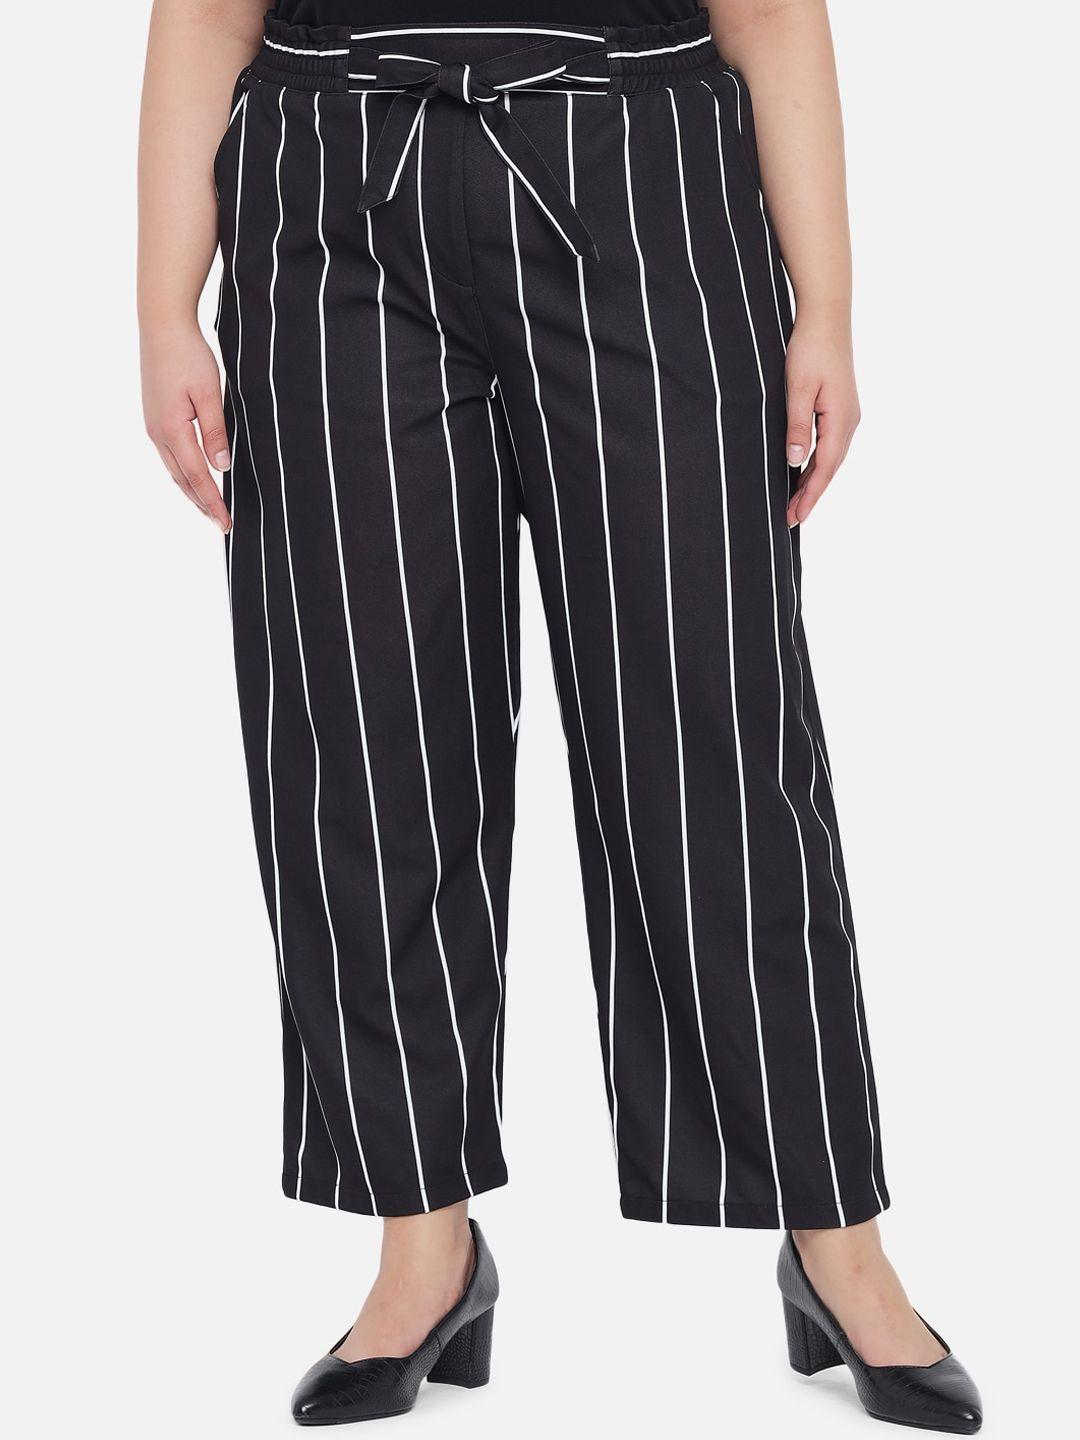 amydus women plus size black & white striped mid-rise parallel trousers